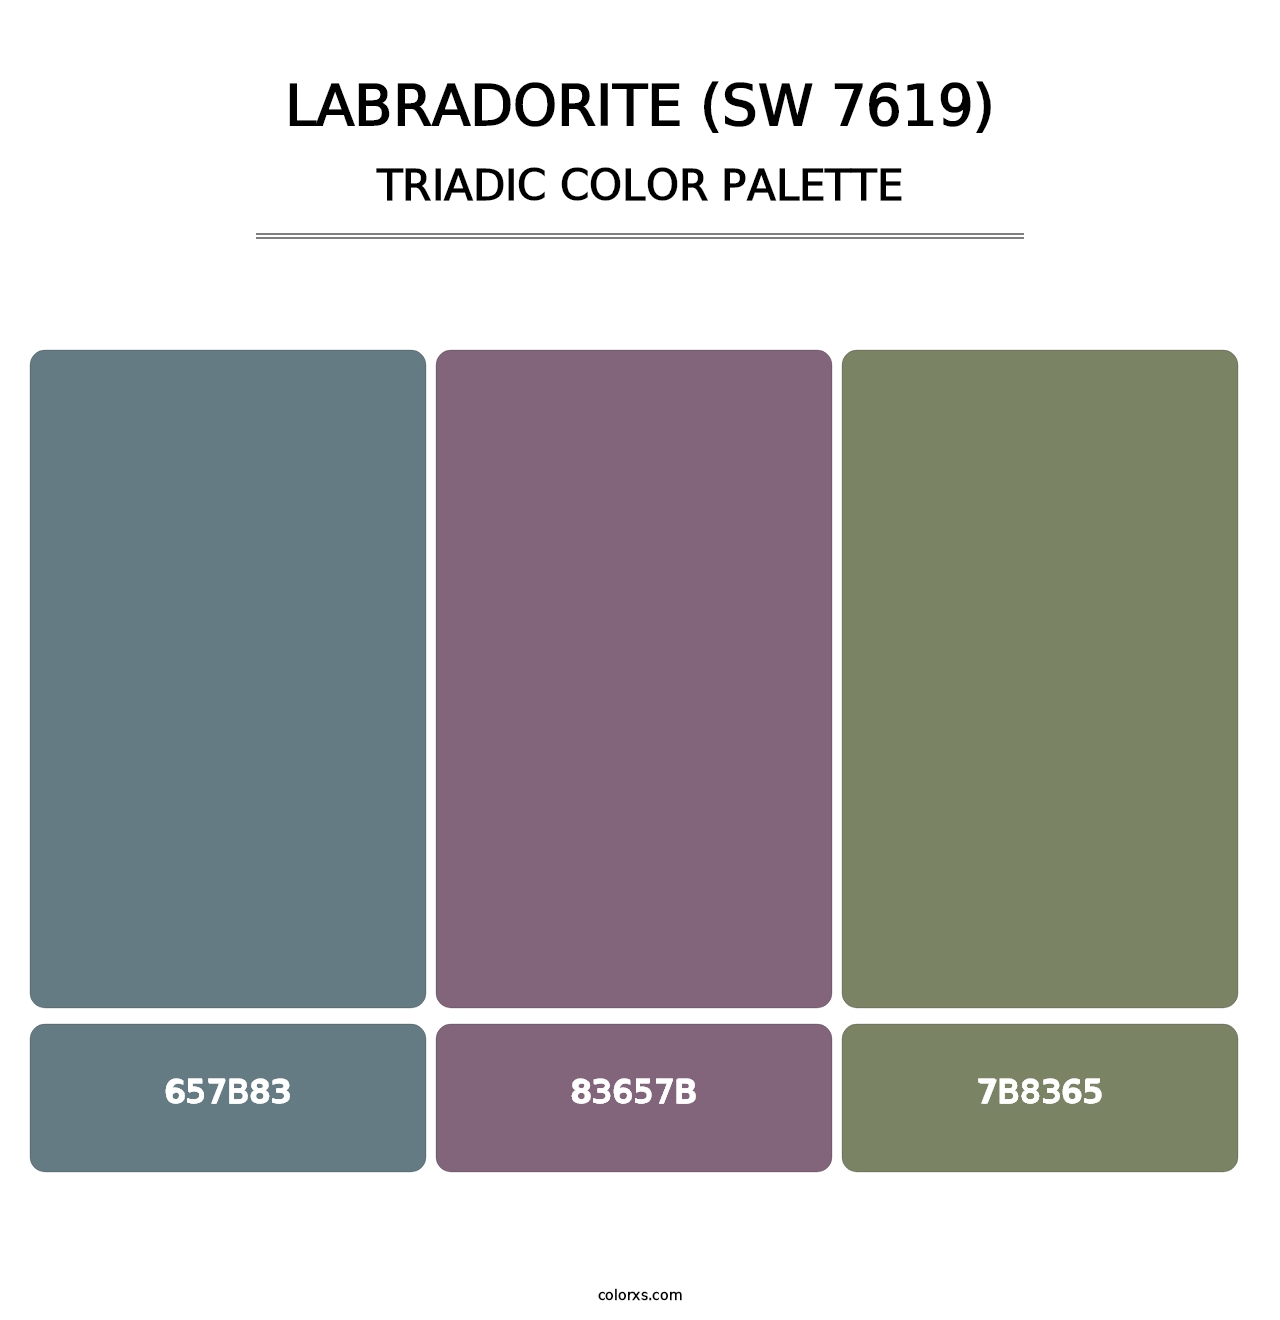 Labradorite (SW 7619) - Triadic Color Palette